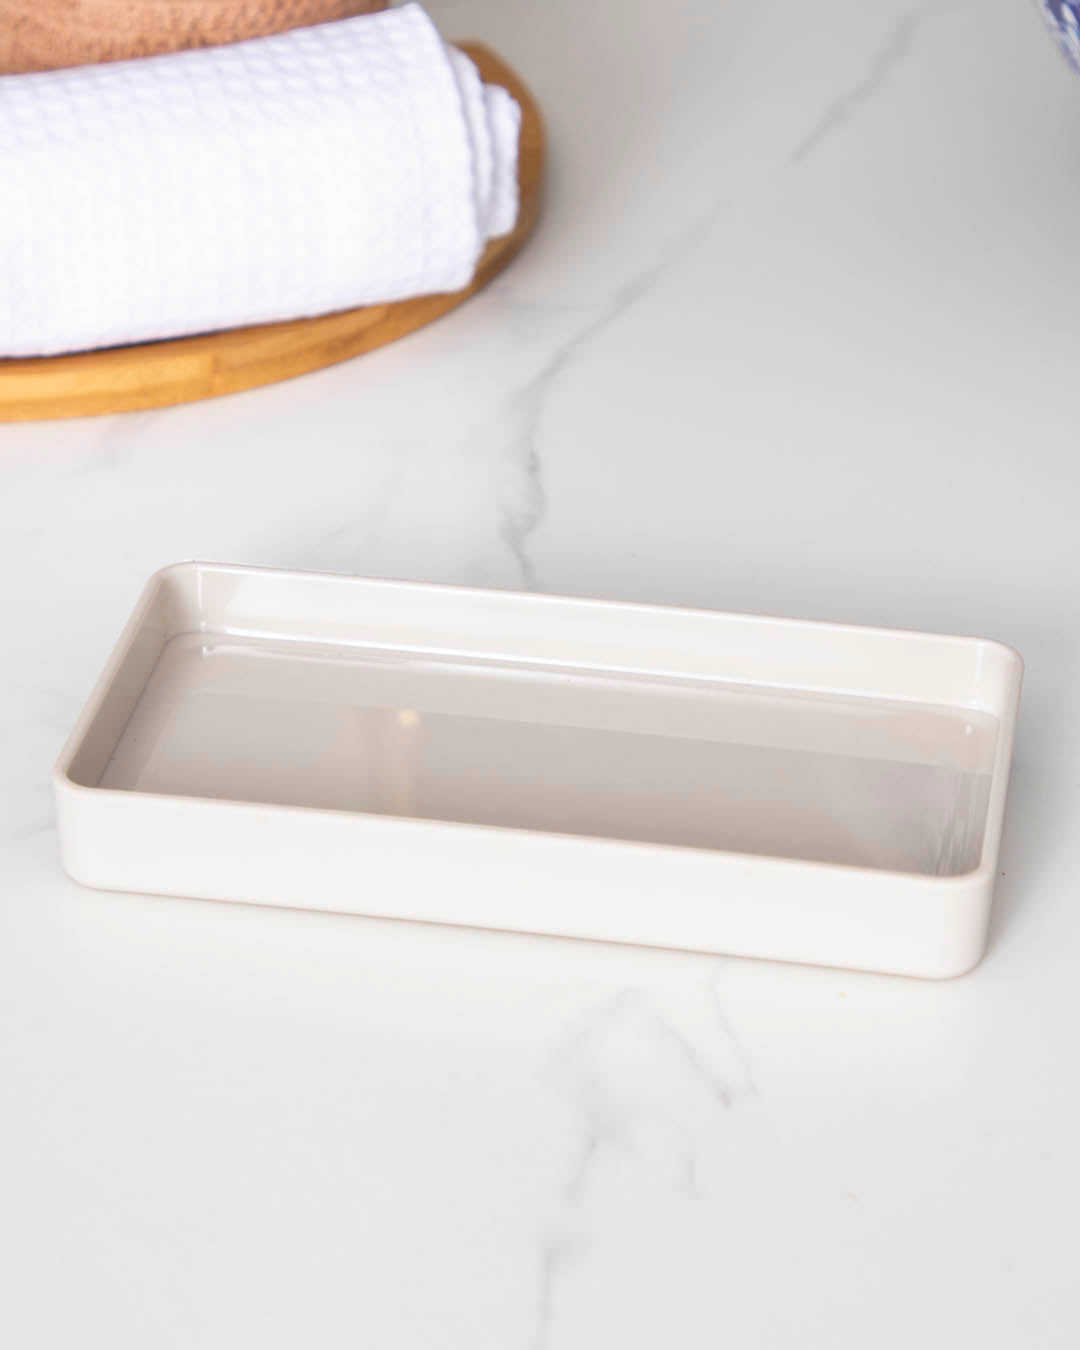 Monochromatic minimal white bathroom accessories tray- bath decor